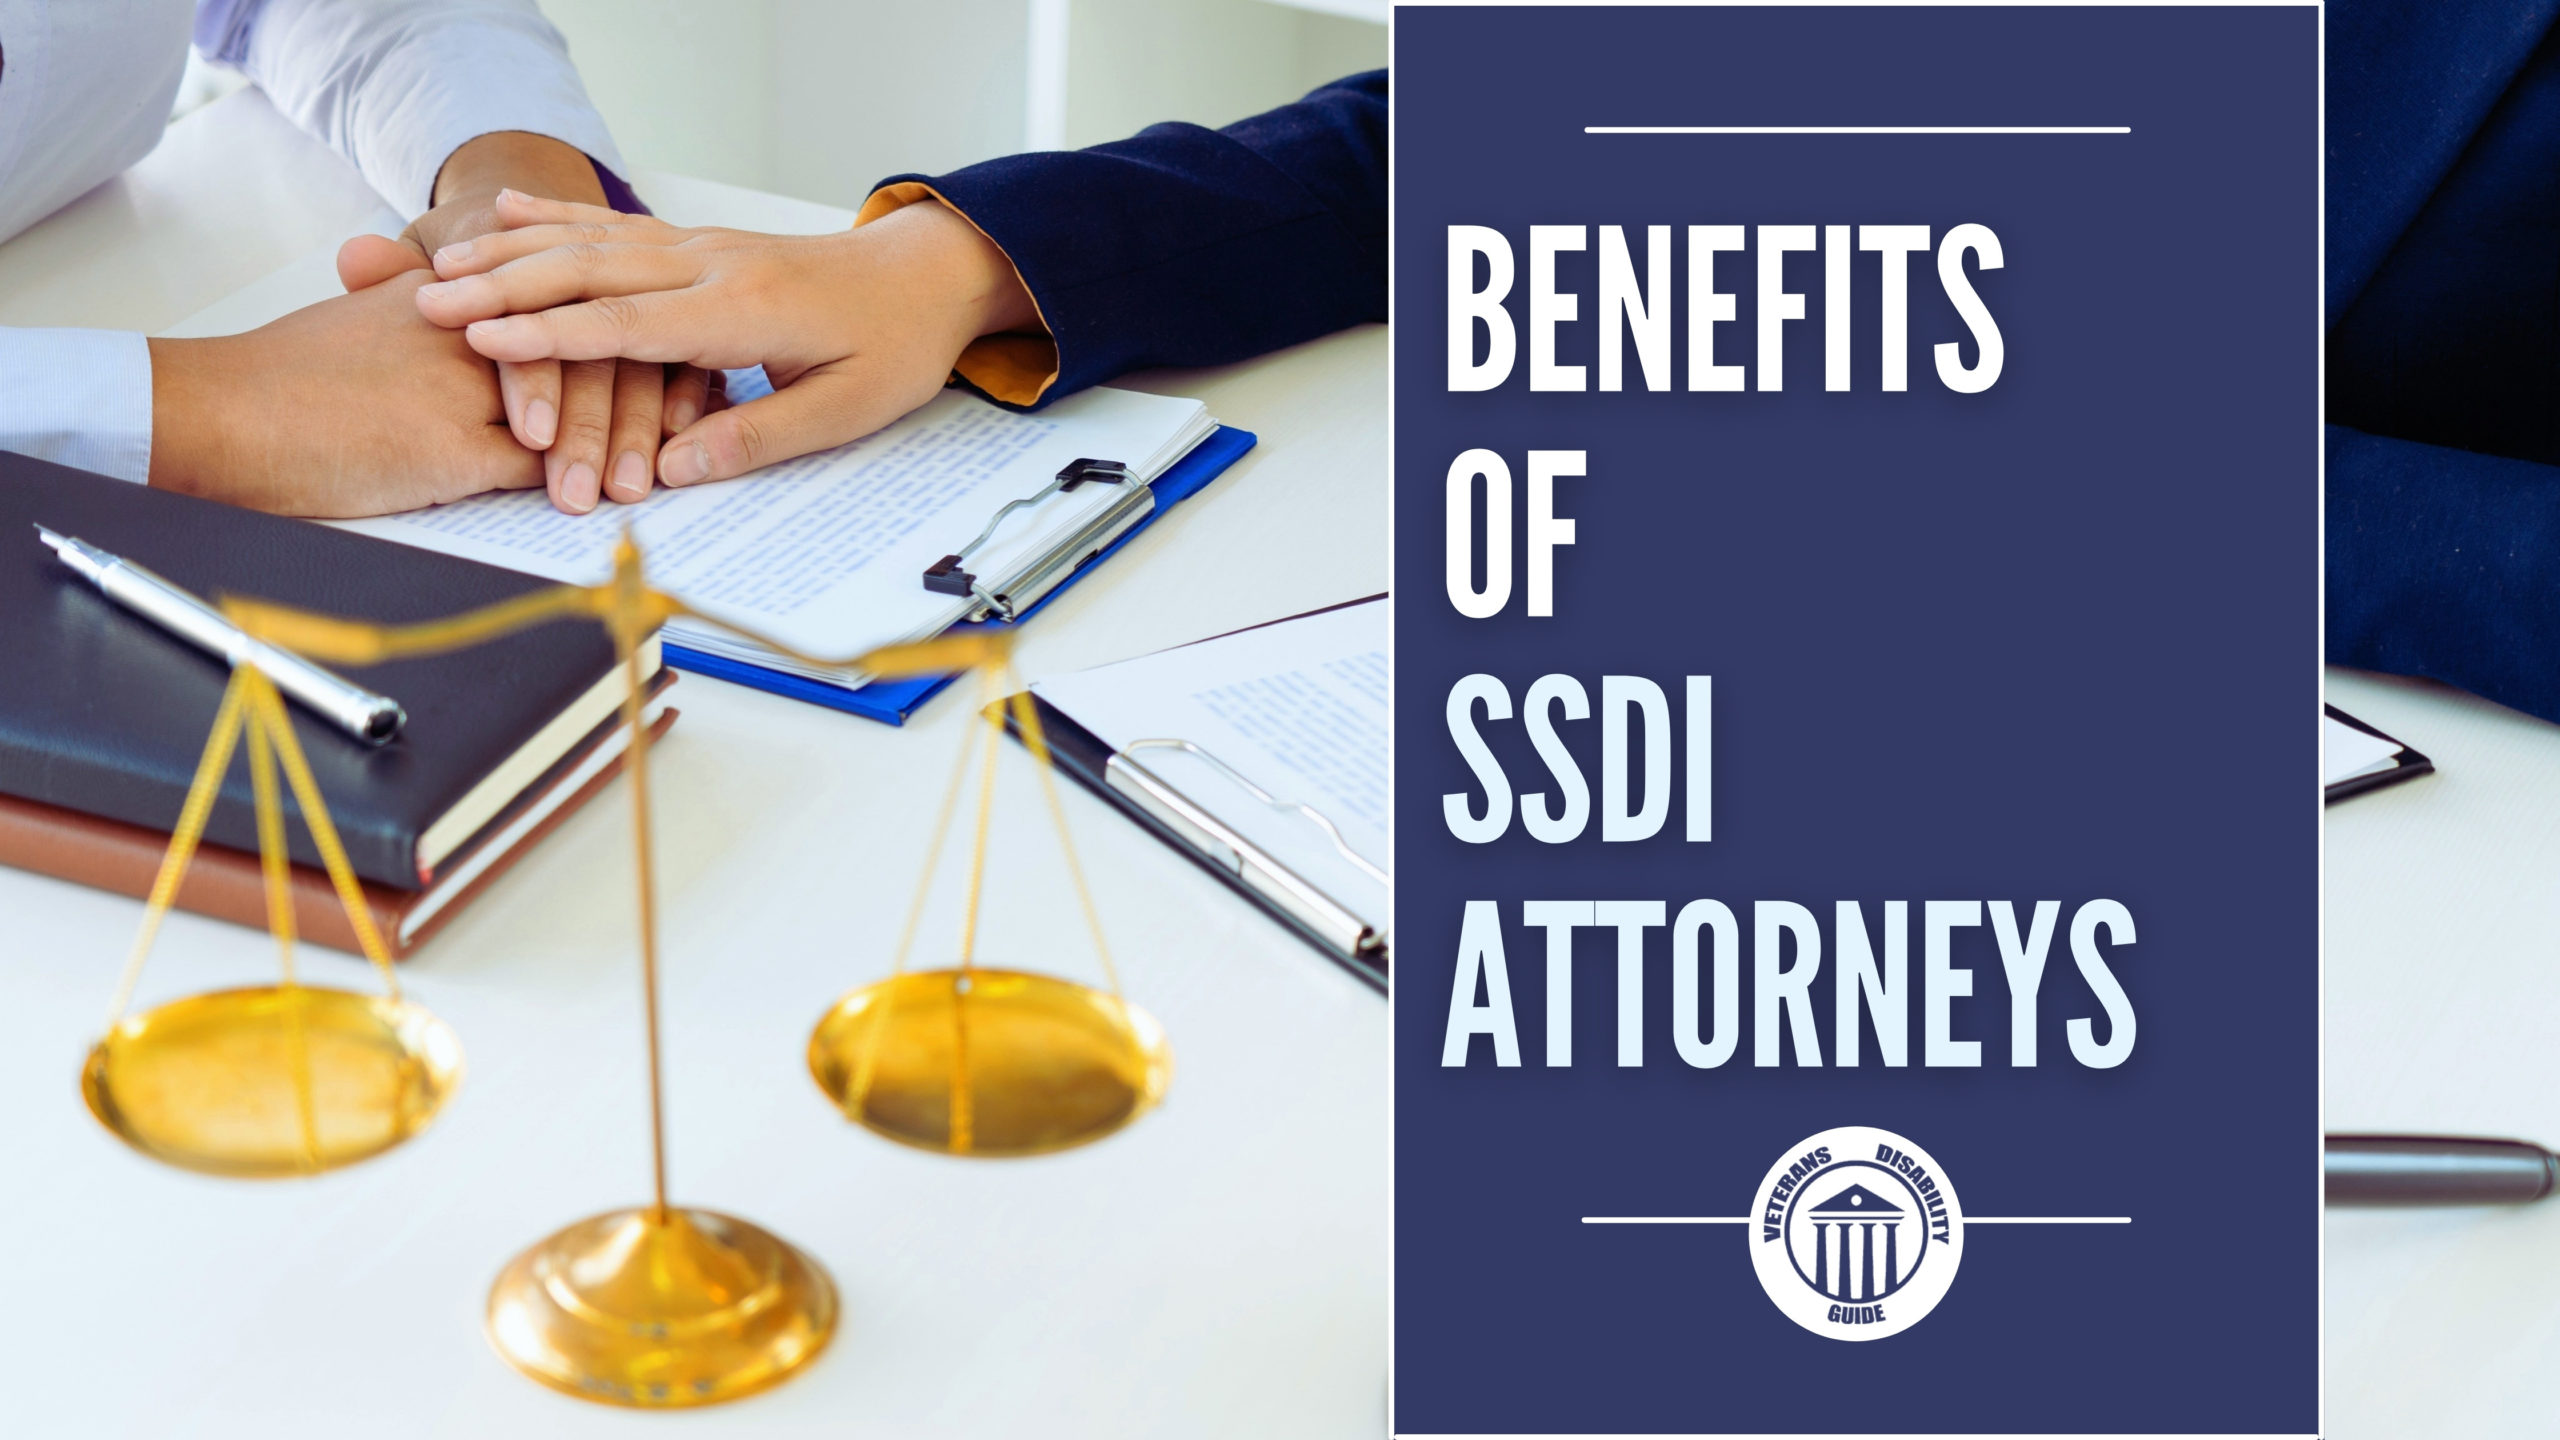 Benefits Of SSDI Attorneys blog header image